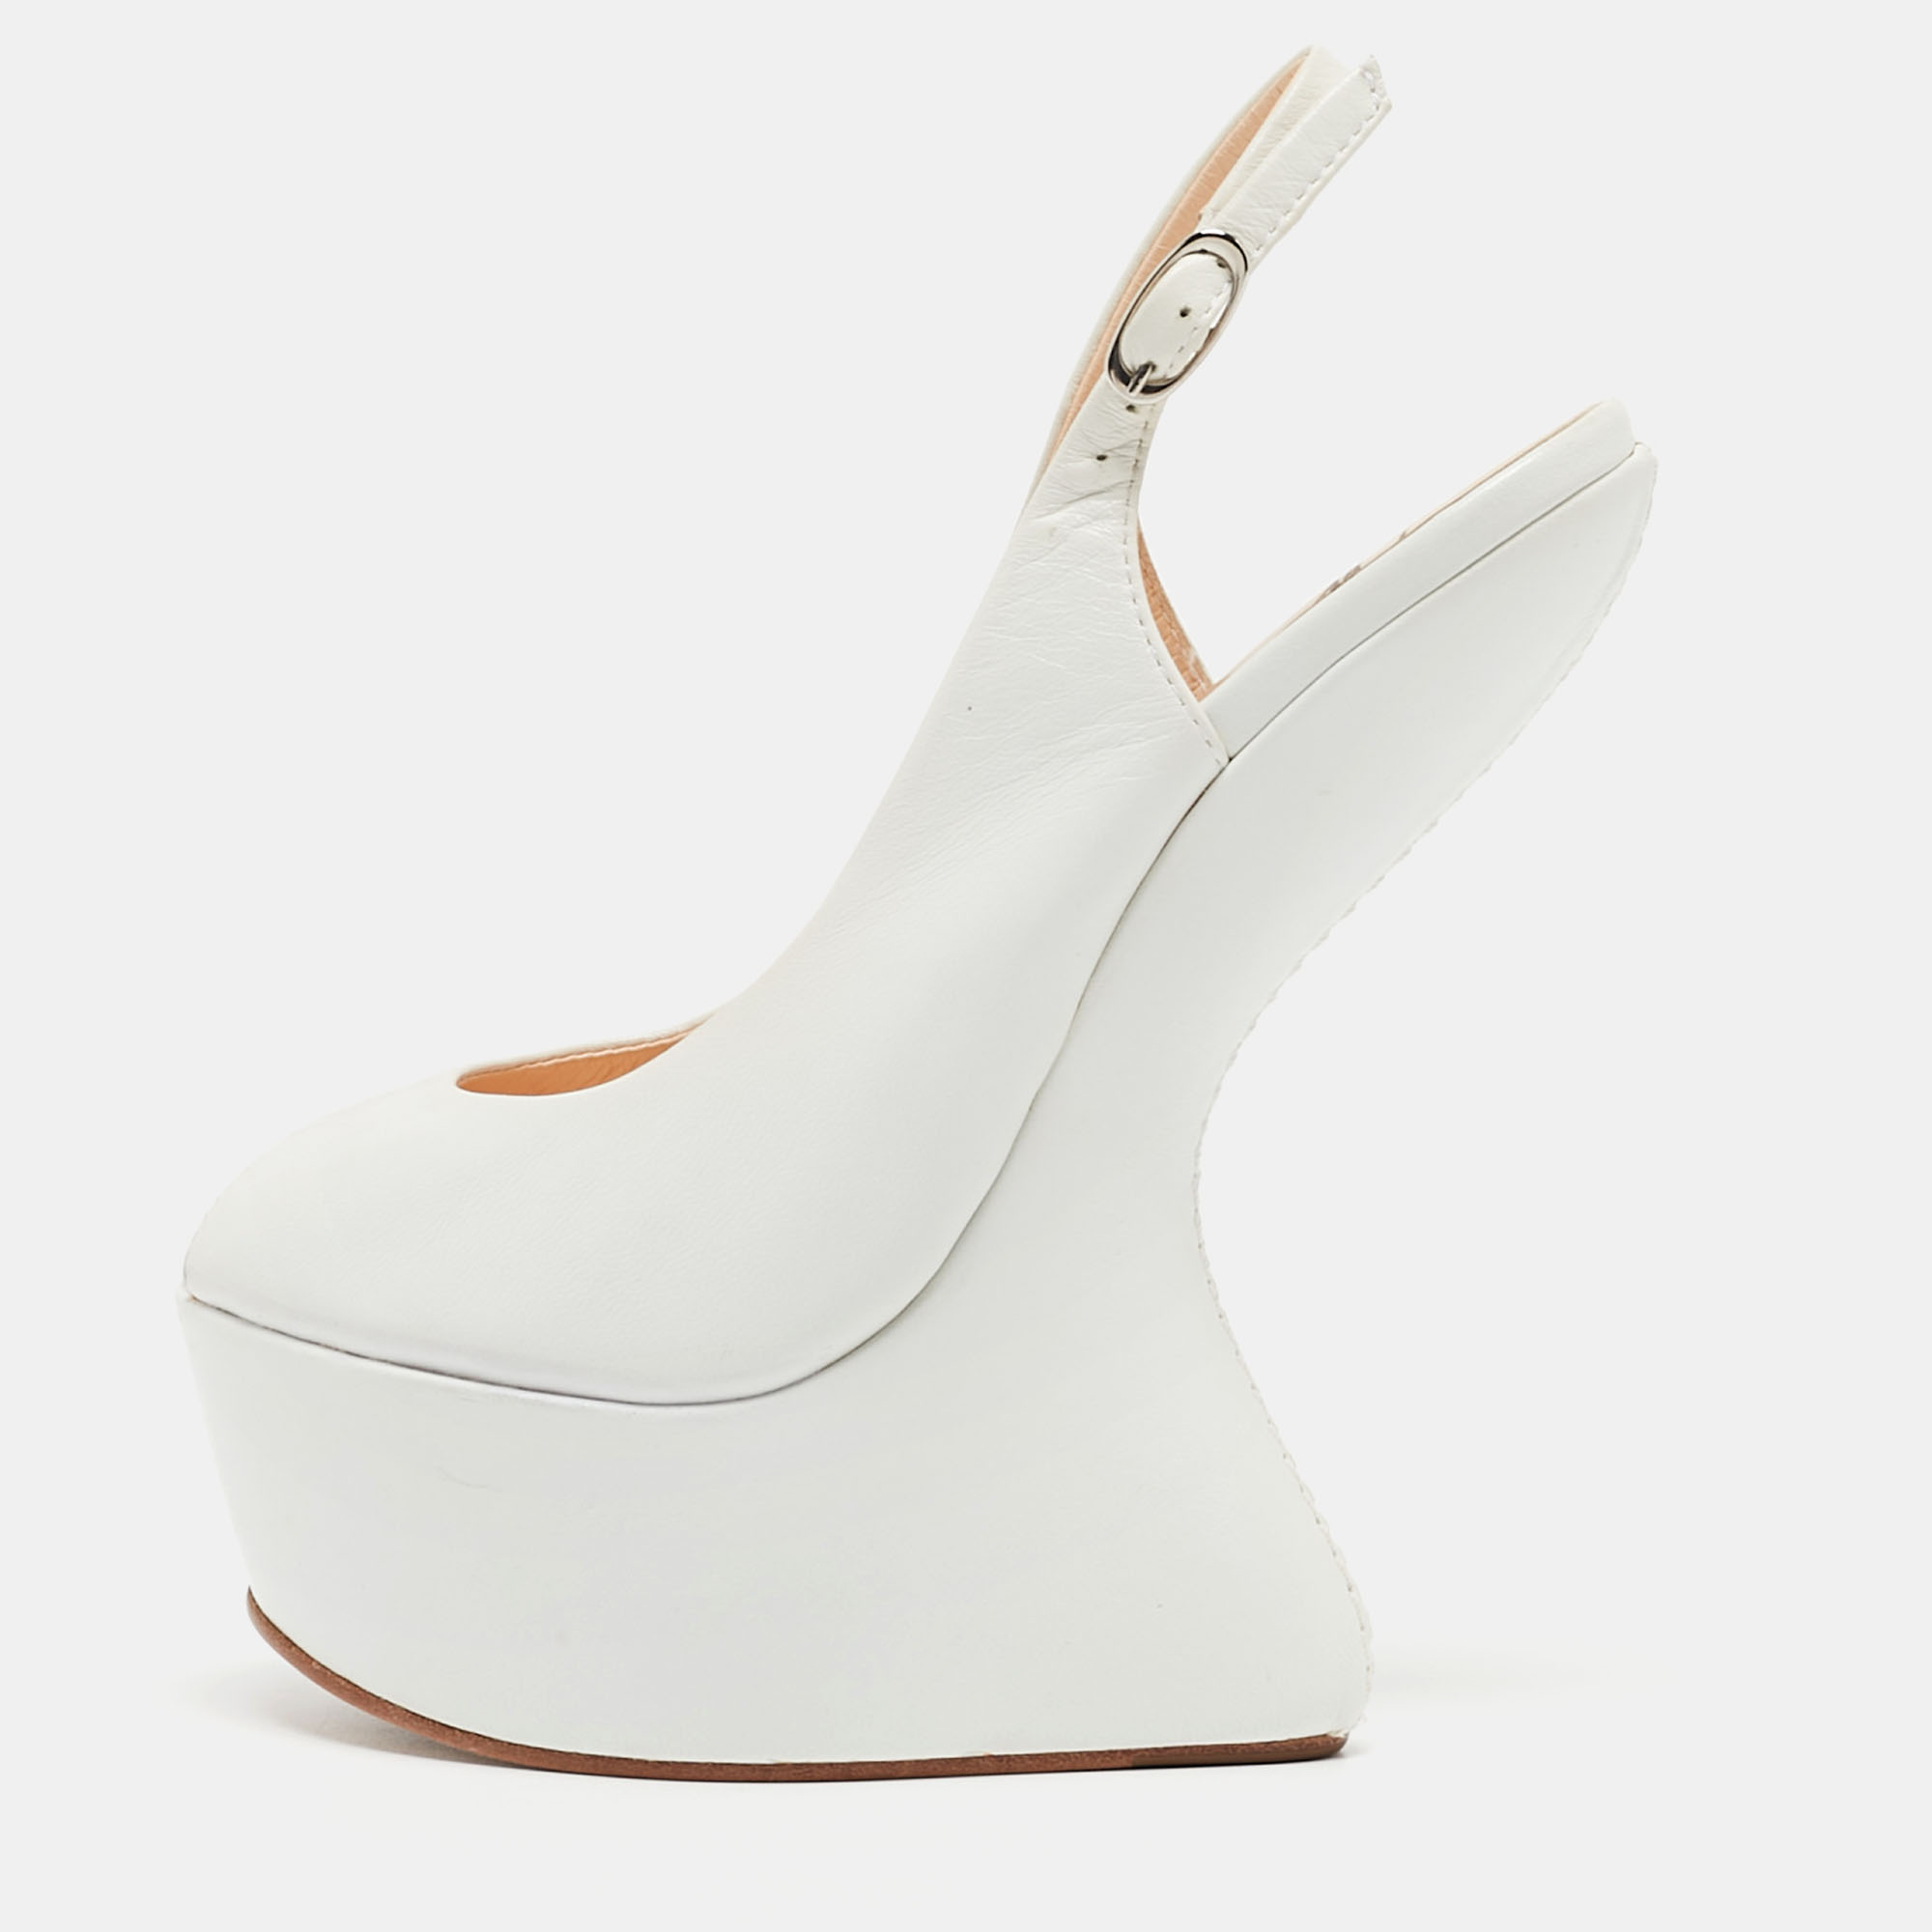 Giuseppe zanotti white leather peep toe platform heel less slingback pumps size 35